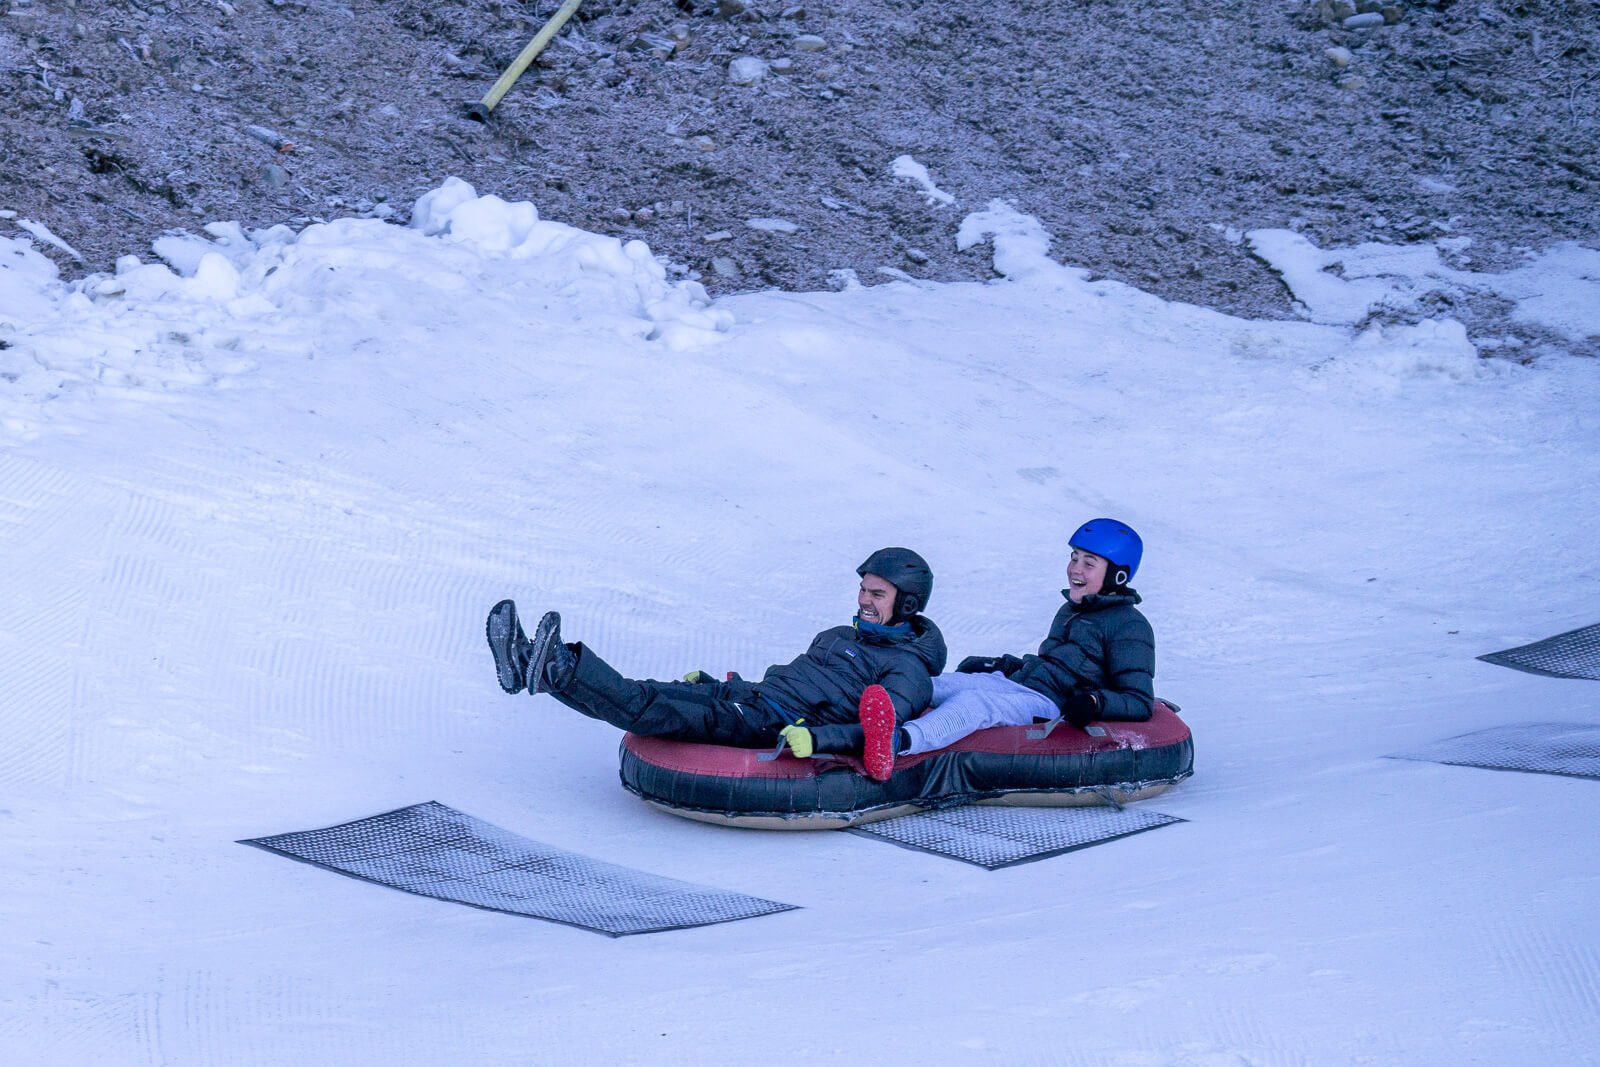 snowboarding during winter in tekapo